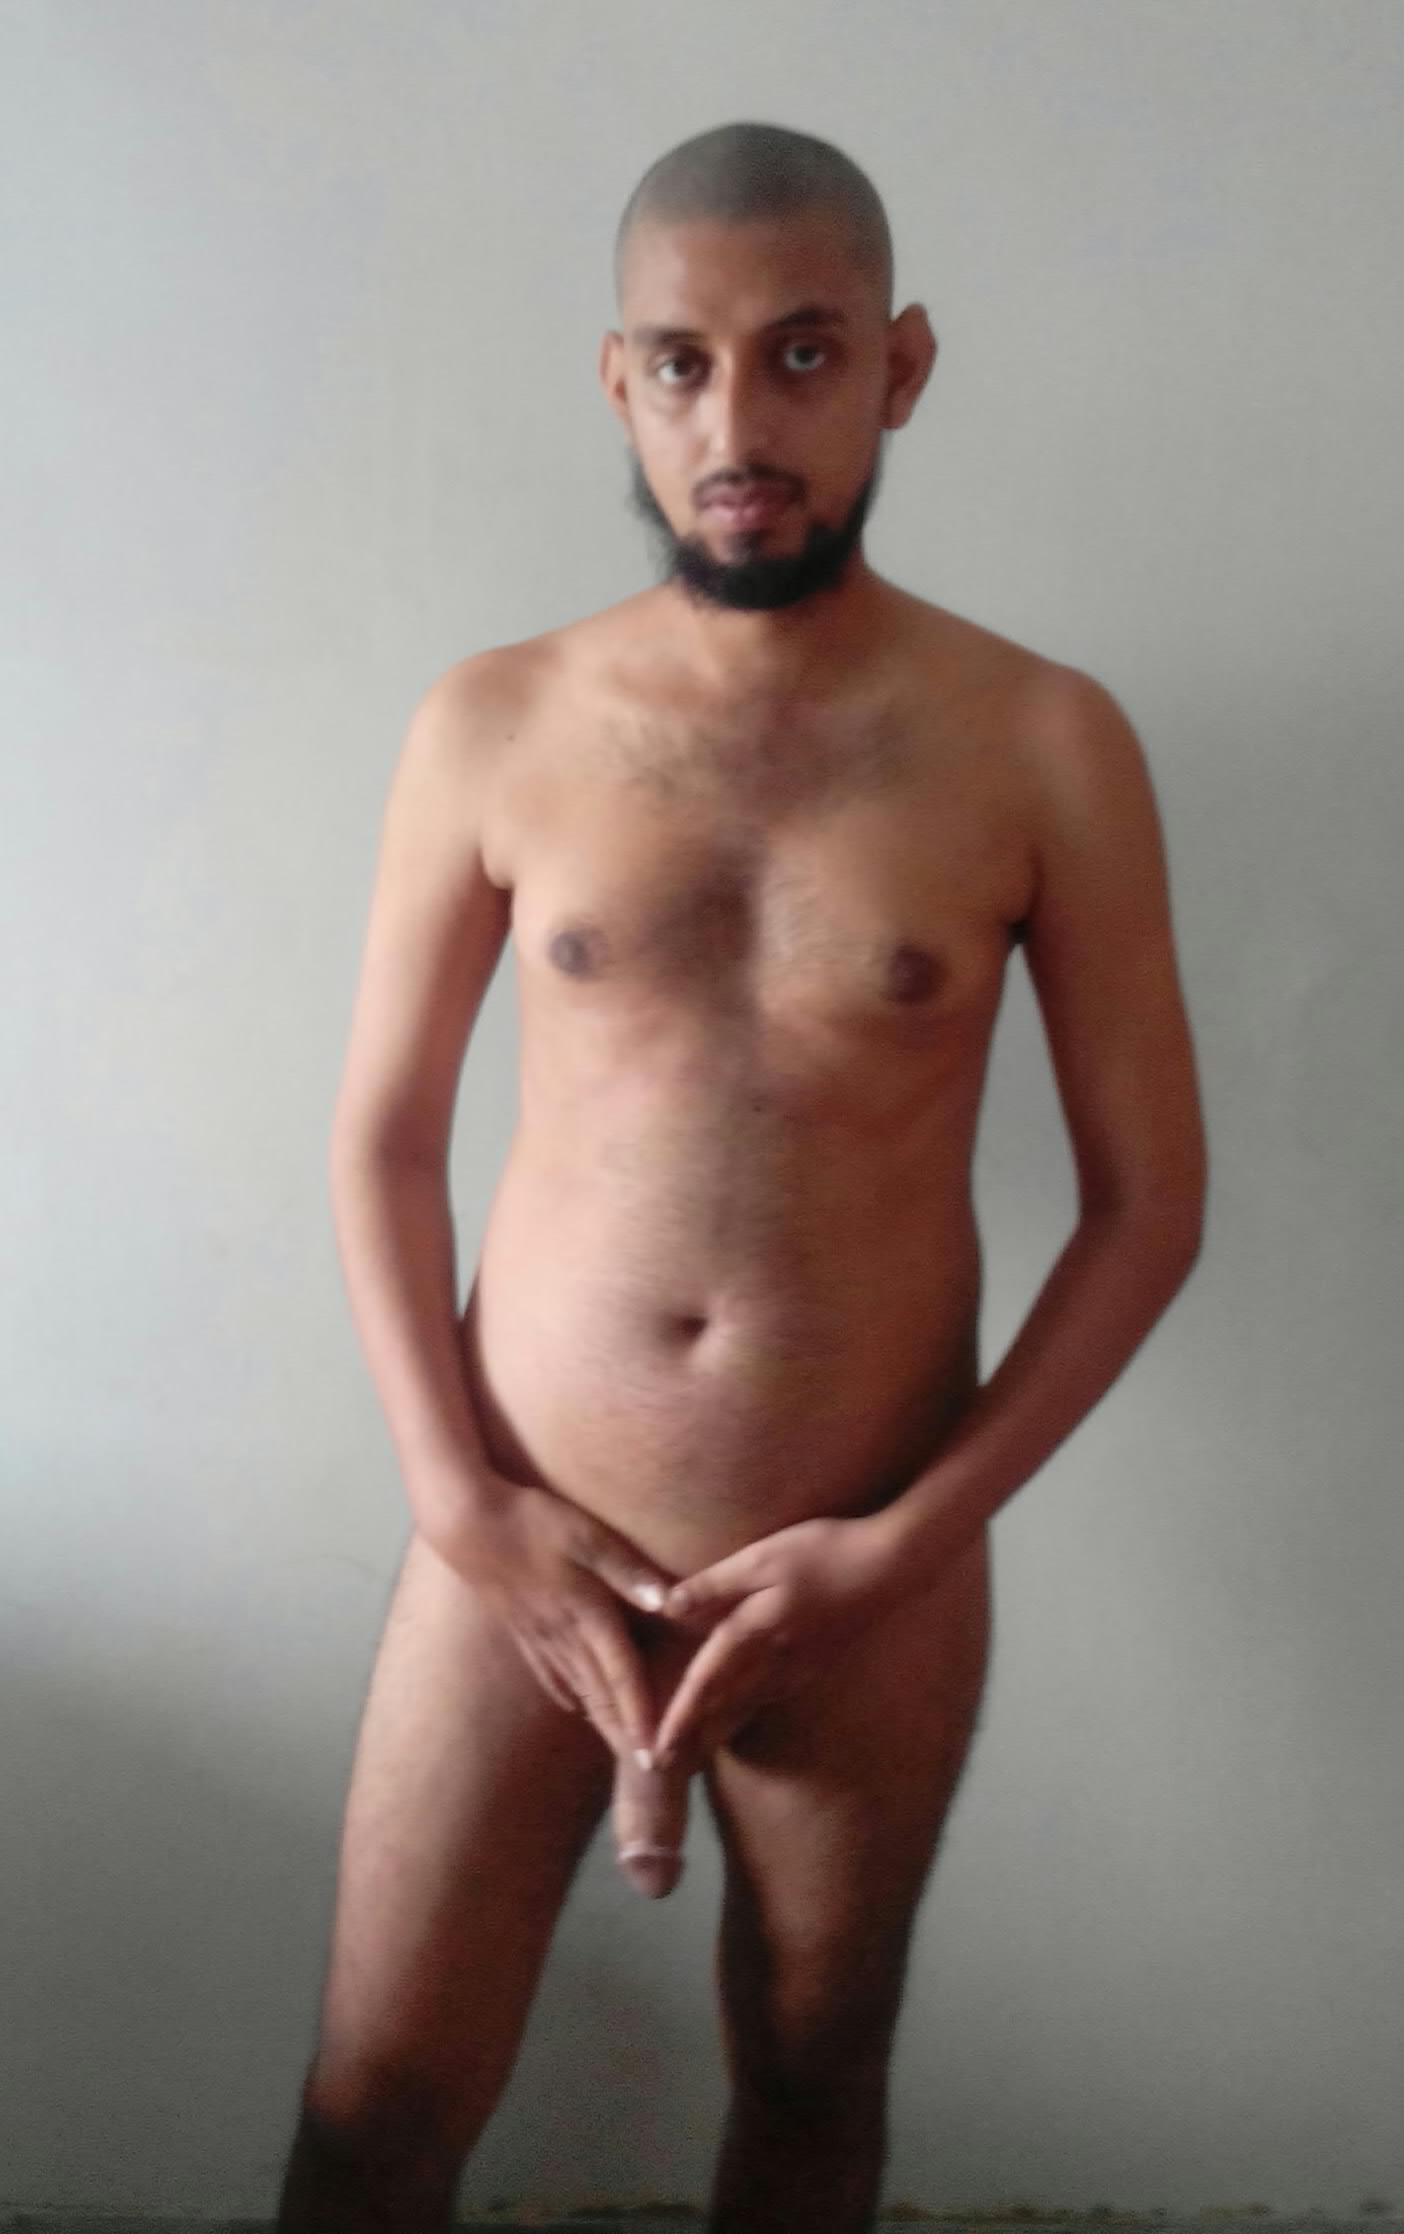 Pakistani sindh punjabi muslim boy asif arain nude naked porn pics for blowjob